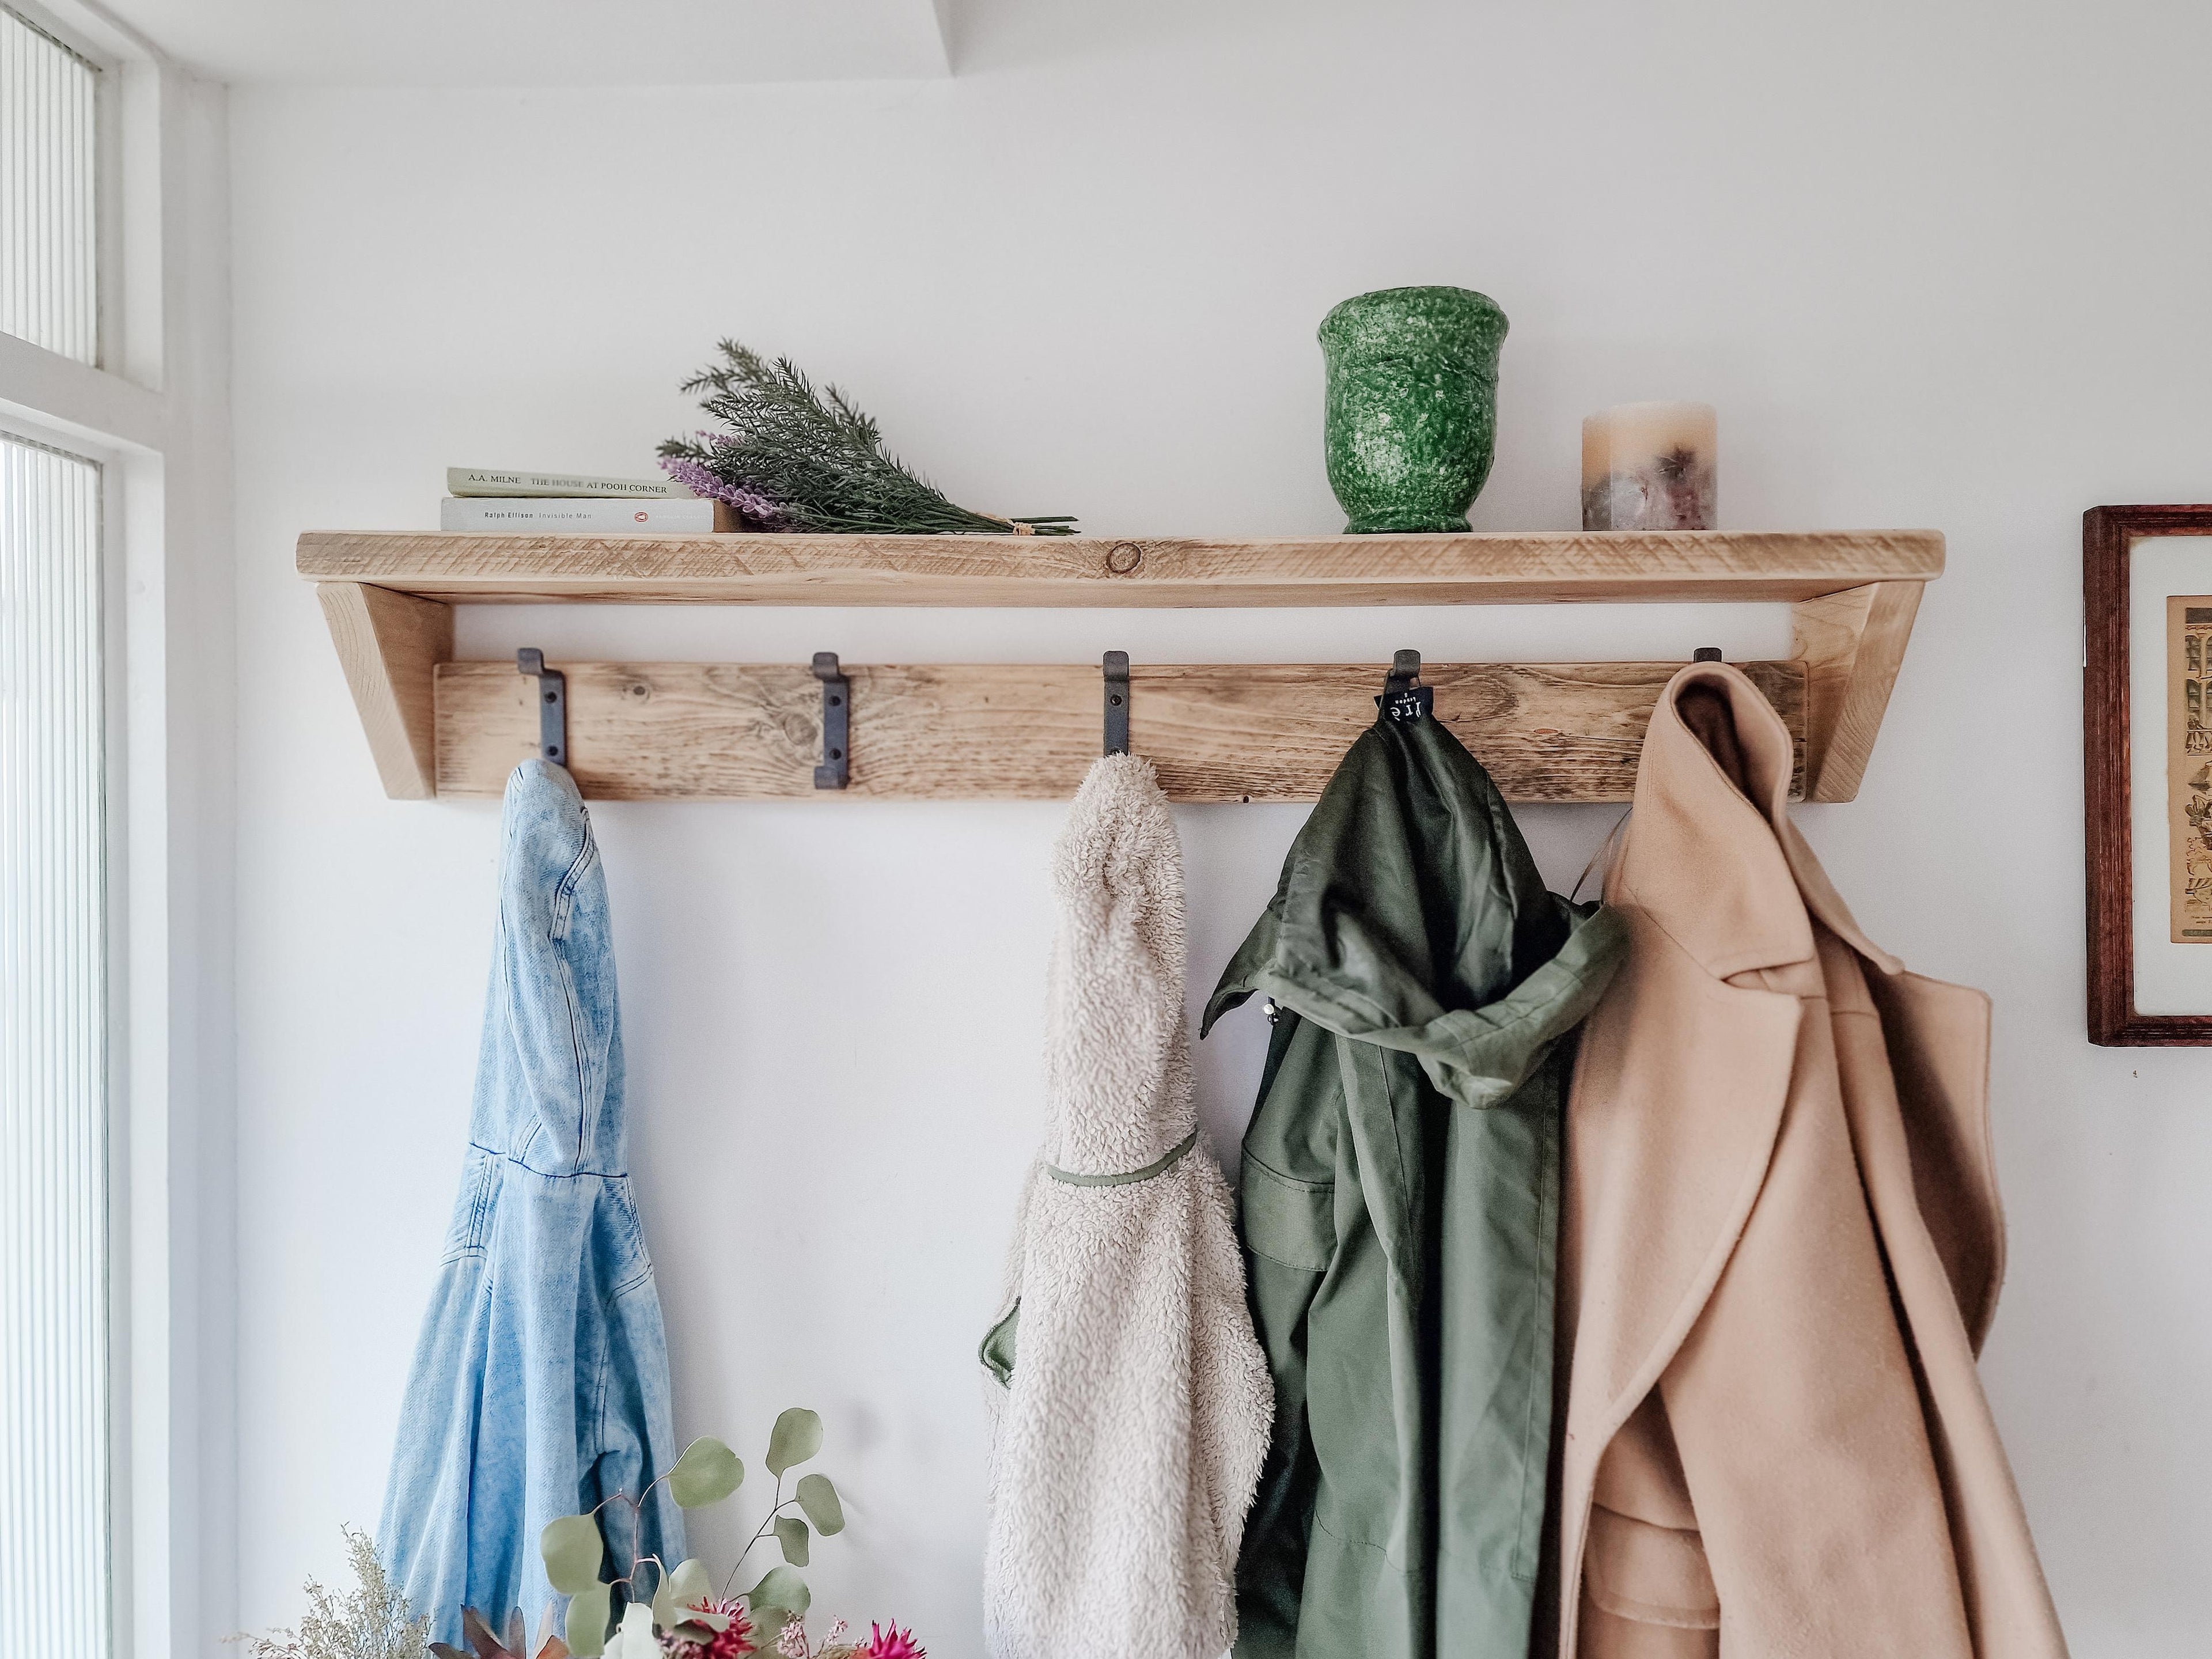 Coat Rack with Shelf